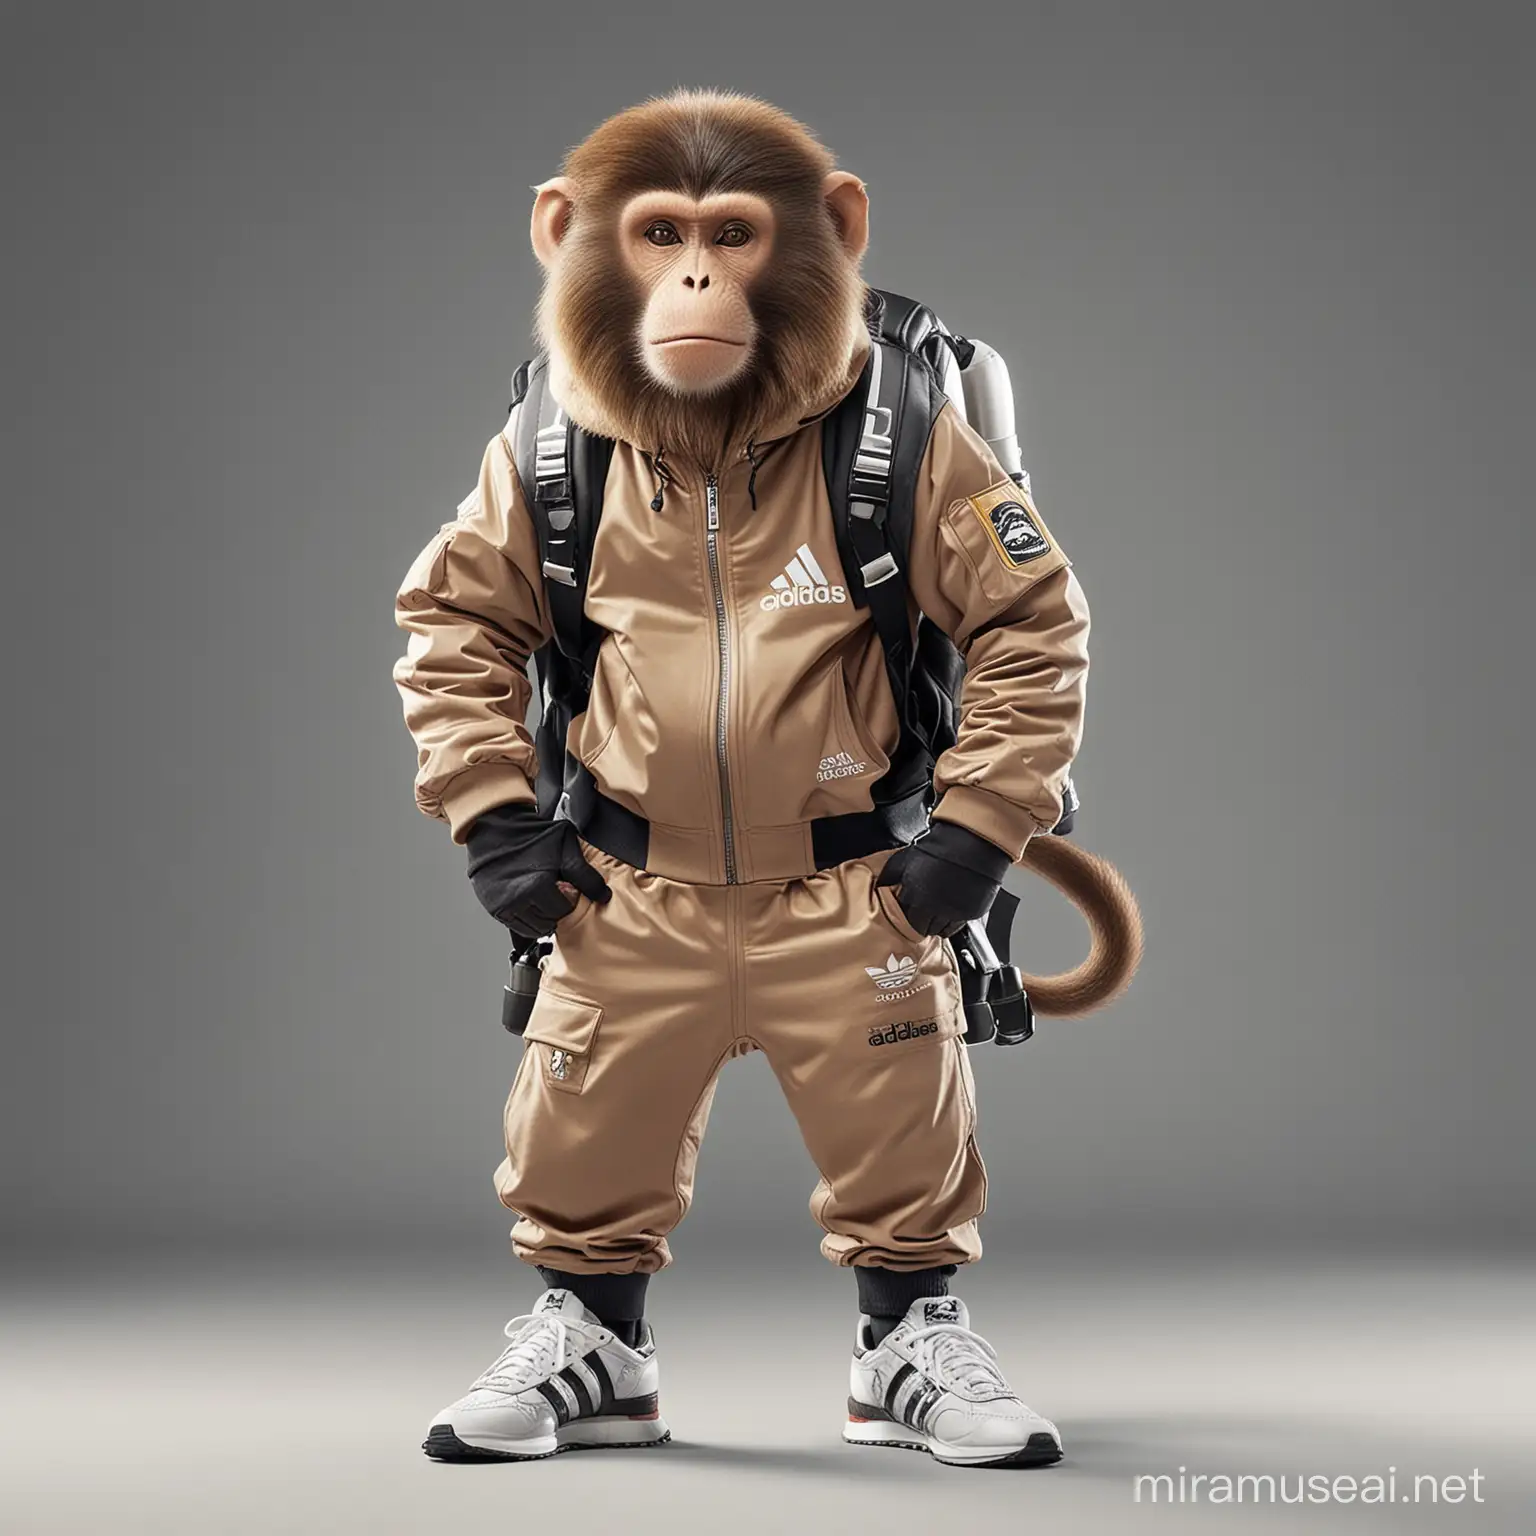 monkey wearing adidas tracksuit and jetpack